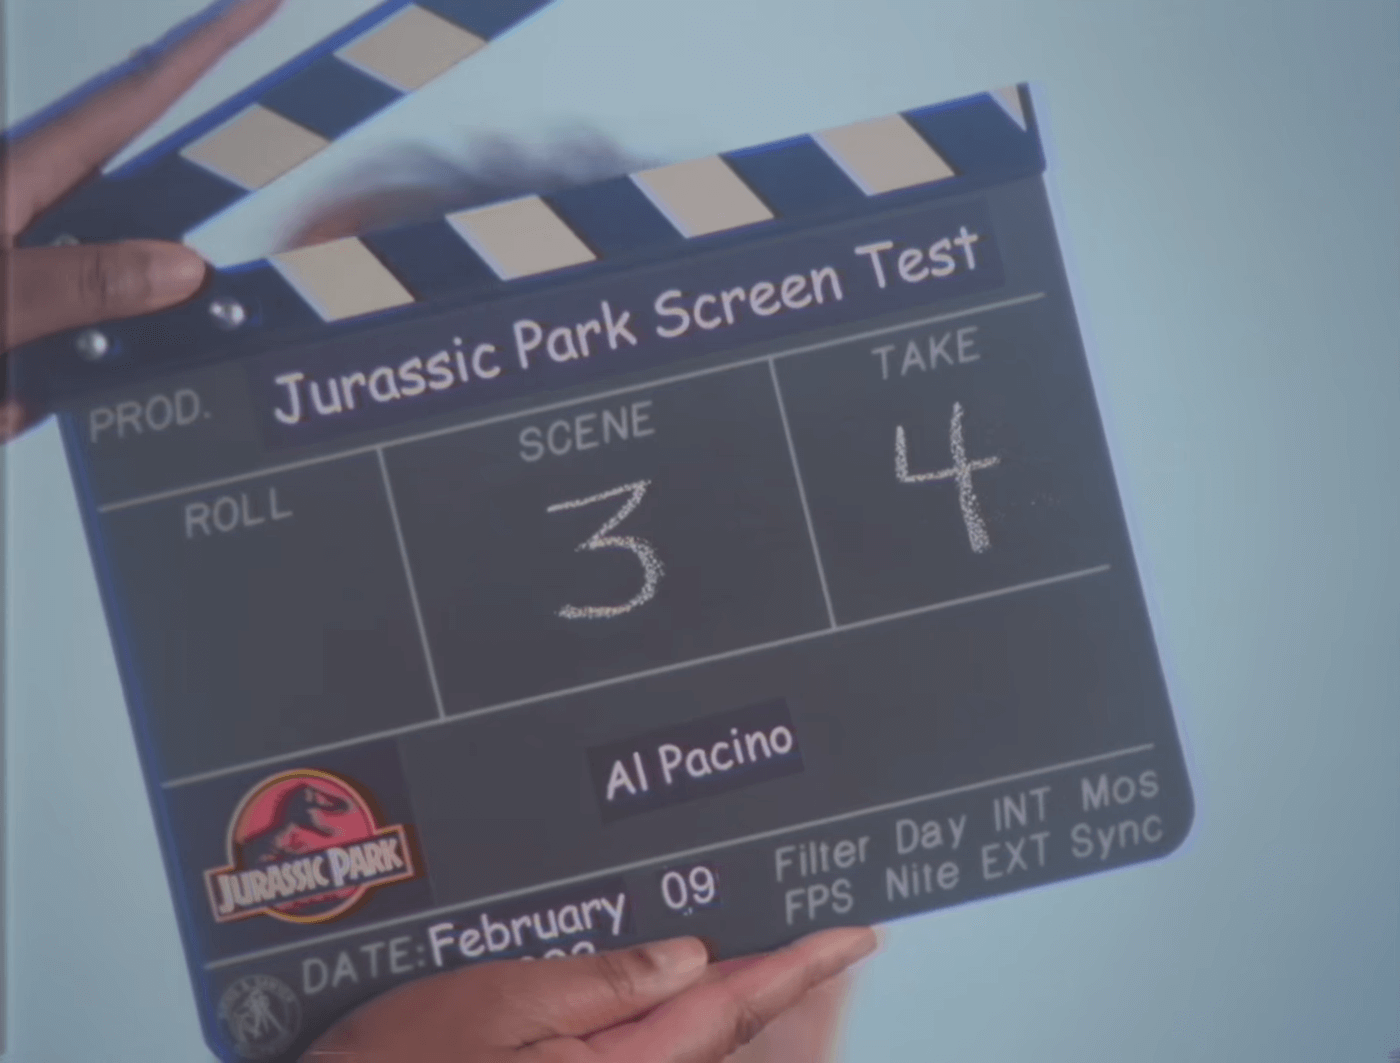 Saturday Night Live airs Jurassic Park Audition Parody Sketch